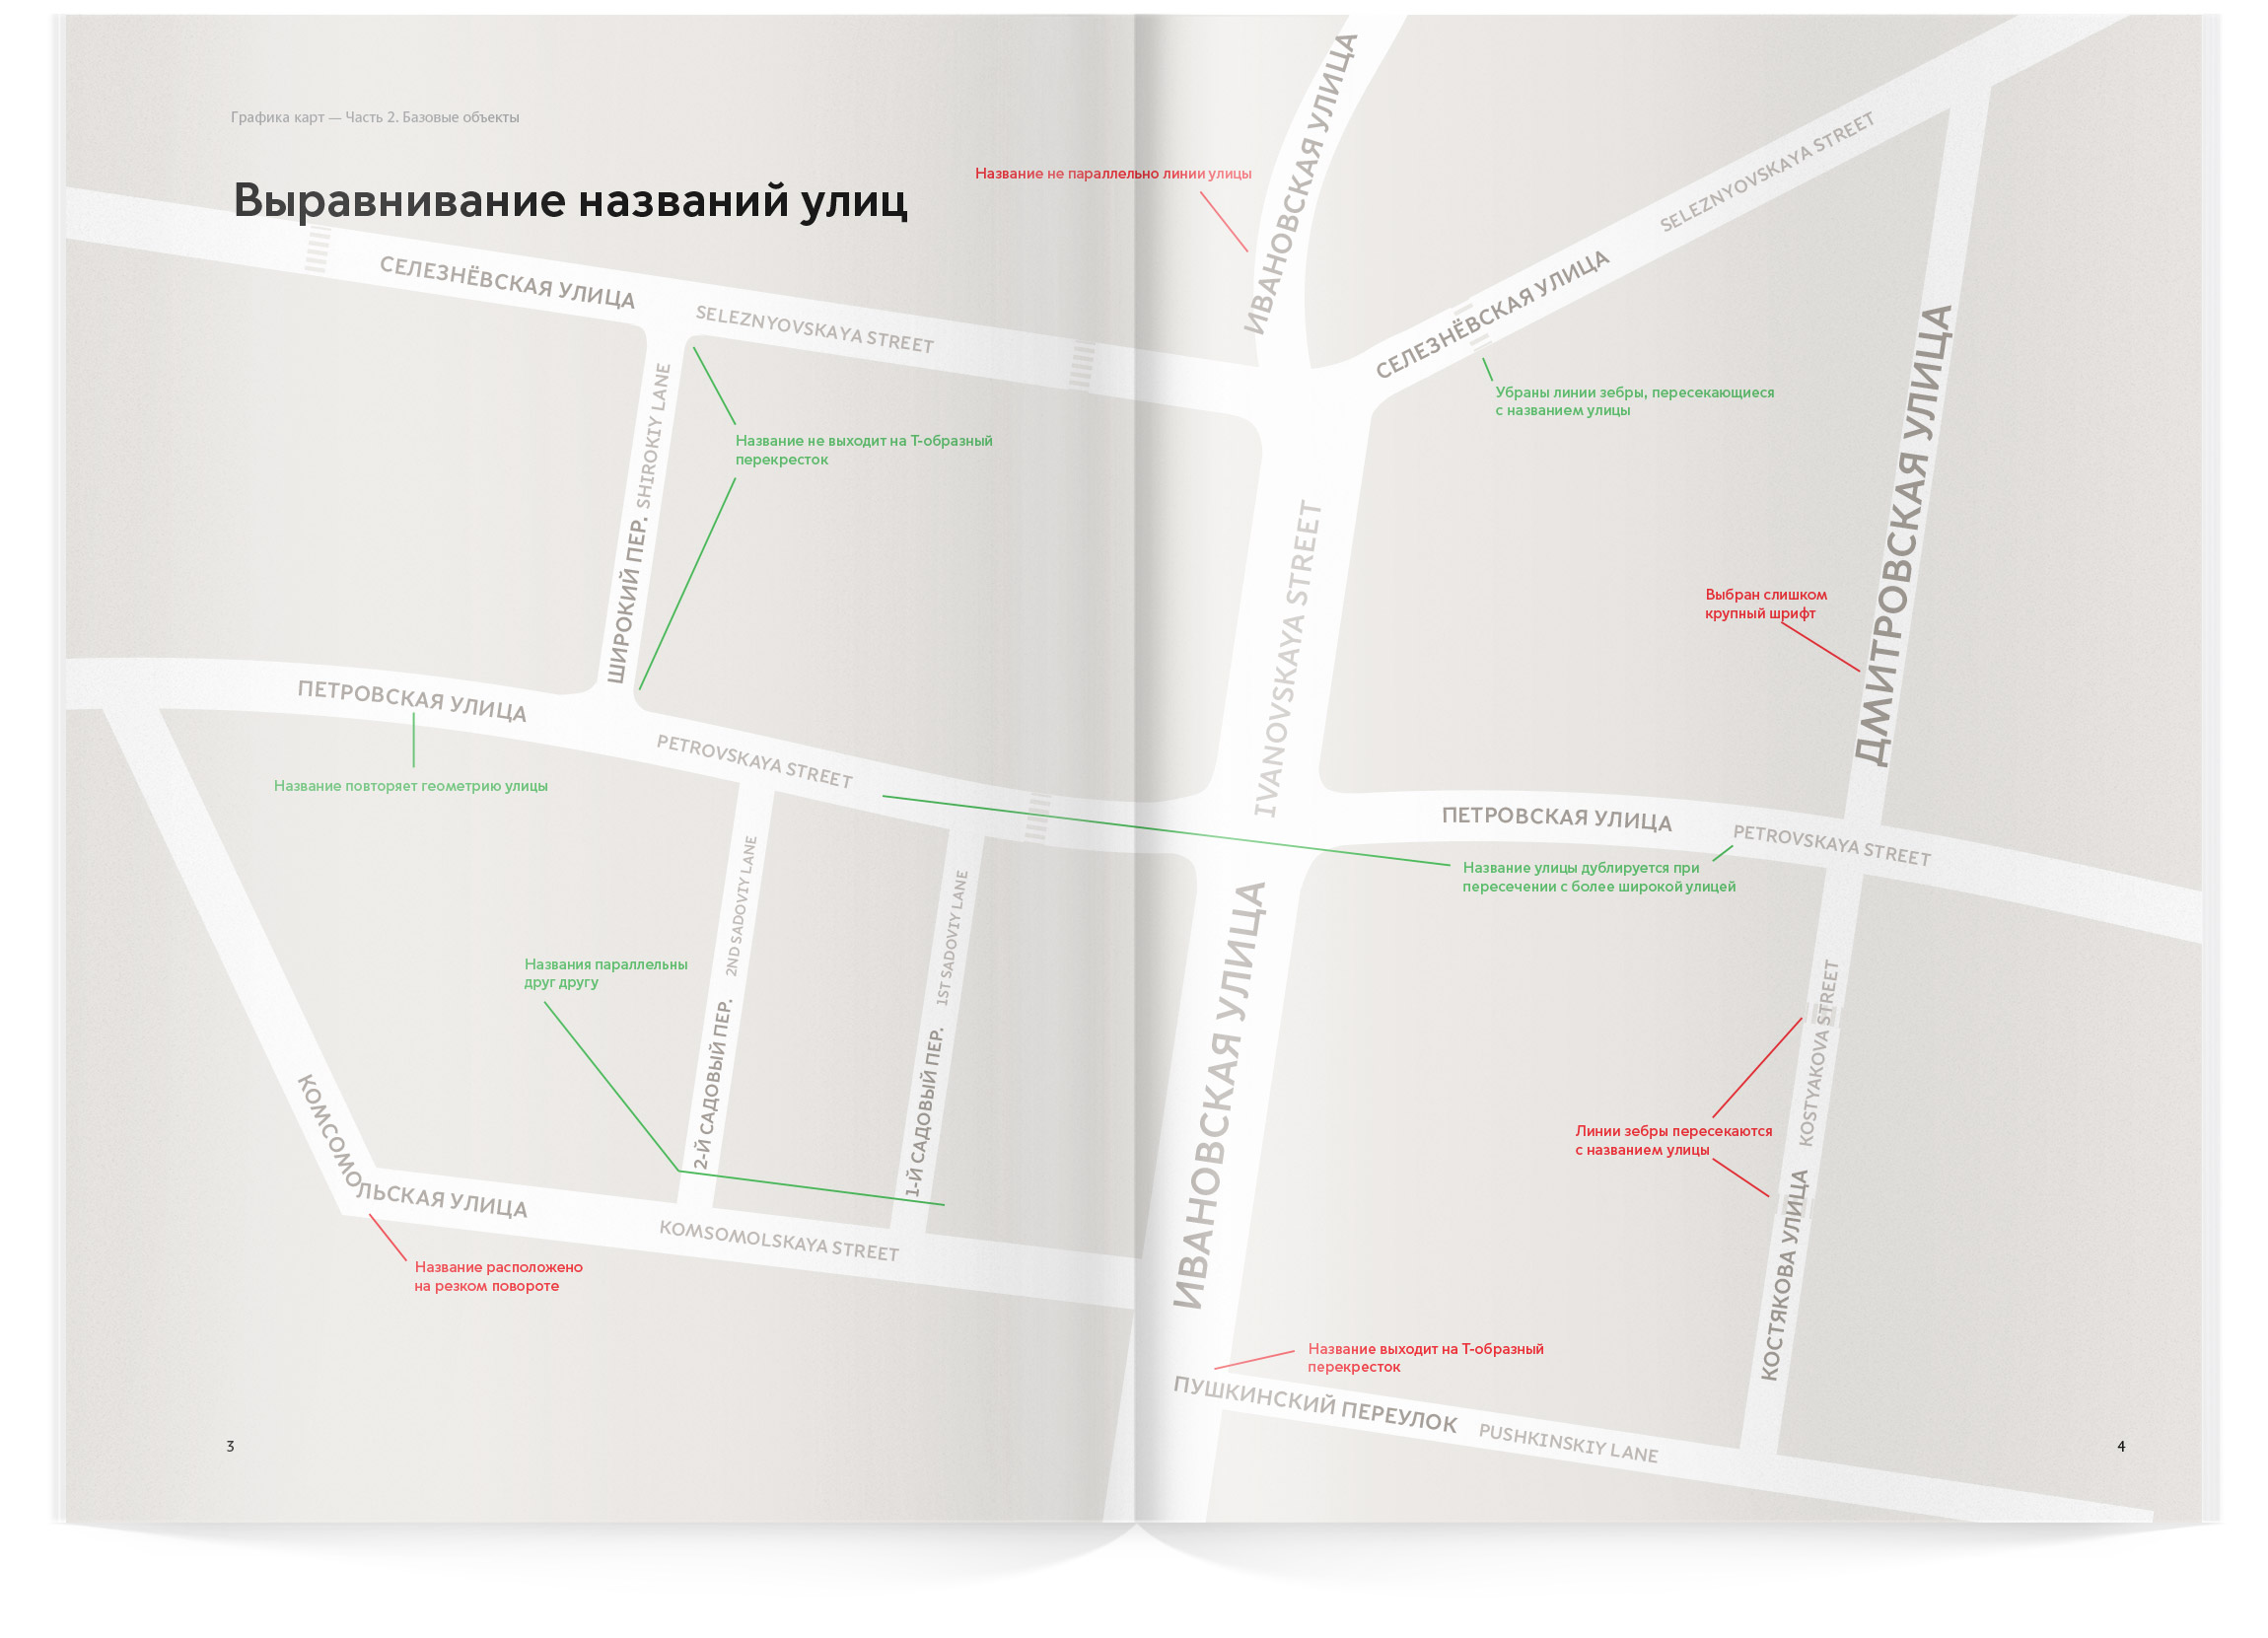 metro navigation maps guide 01b